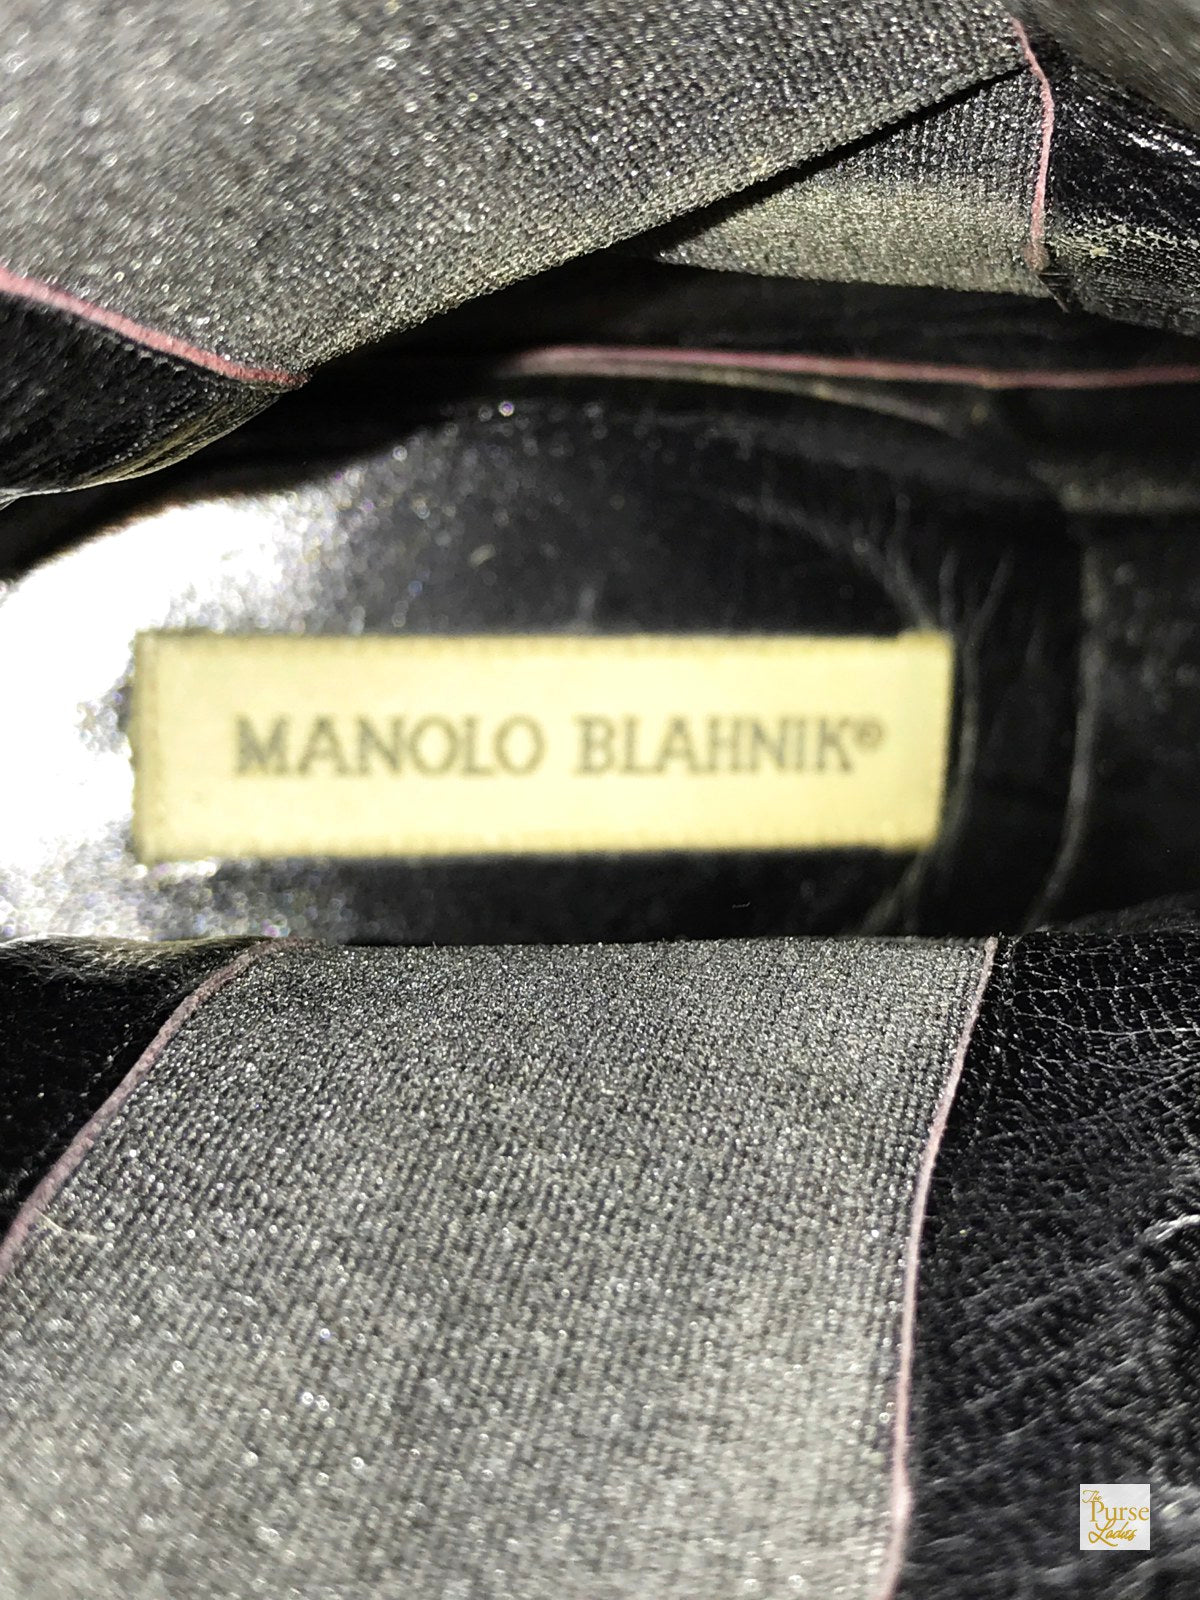 MANOLO BLAHNIK Black Snakeskin Ankle Boots